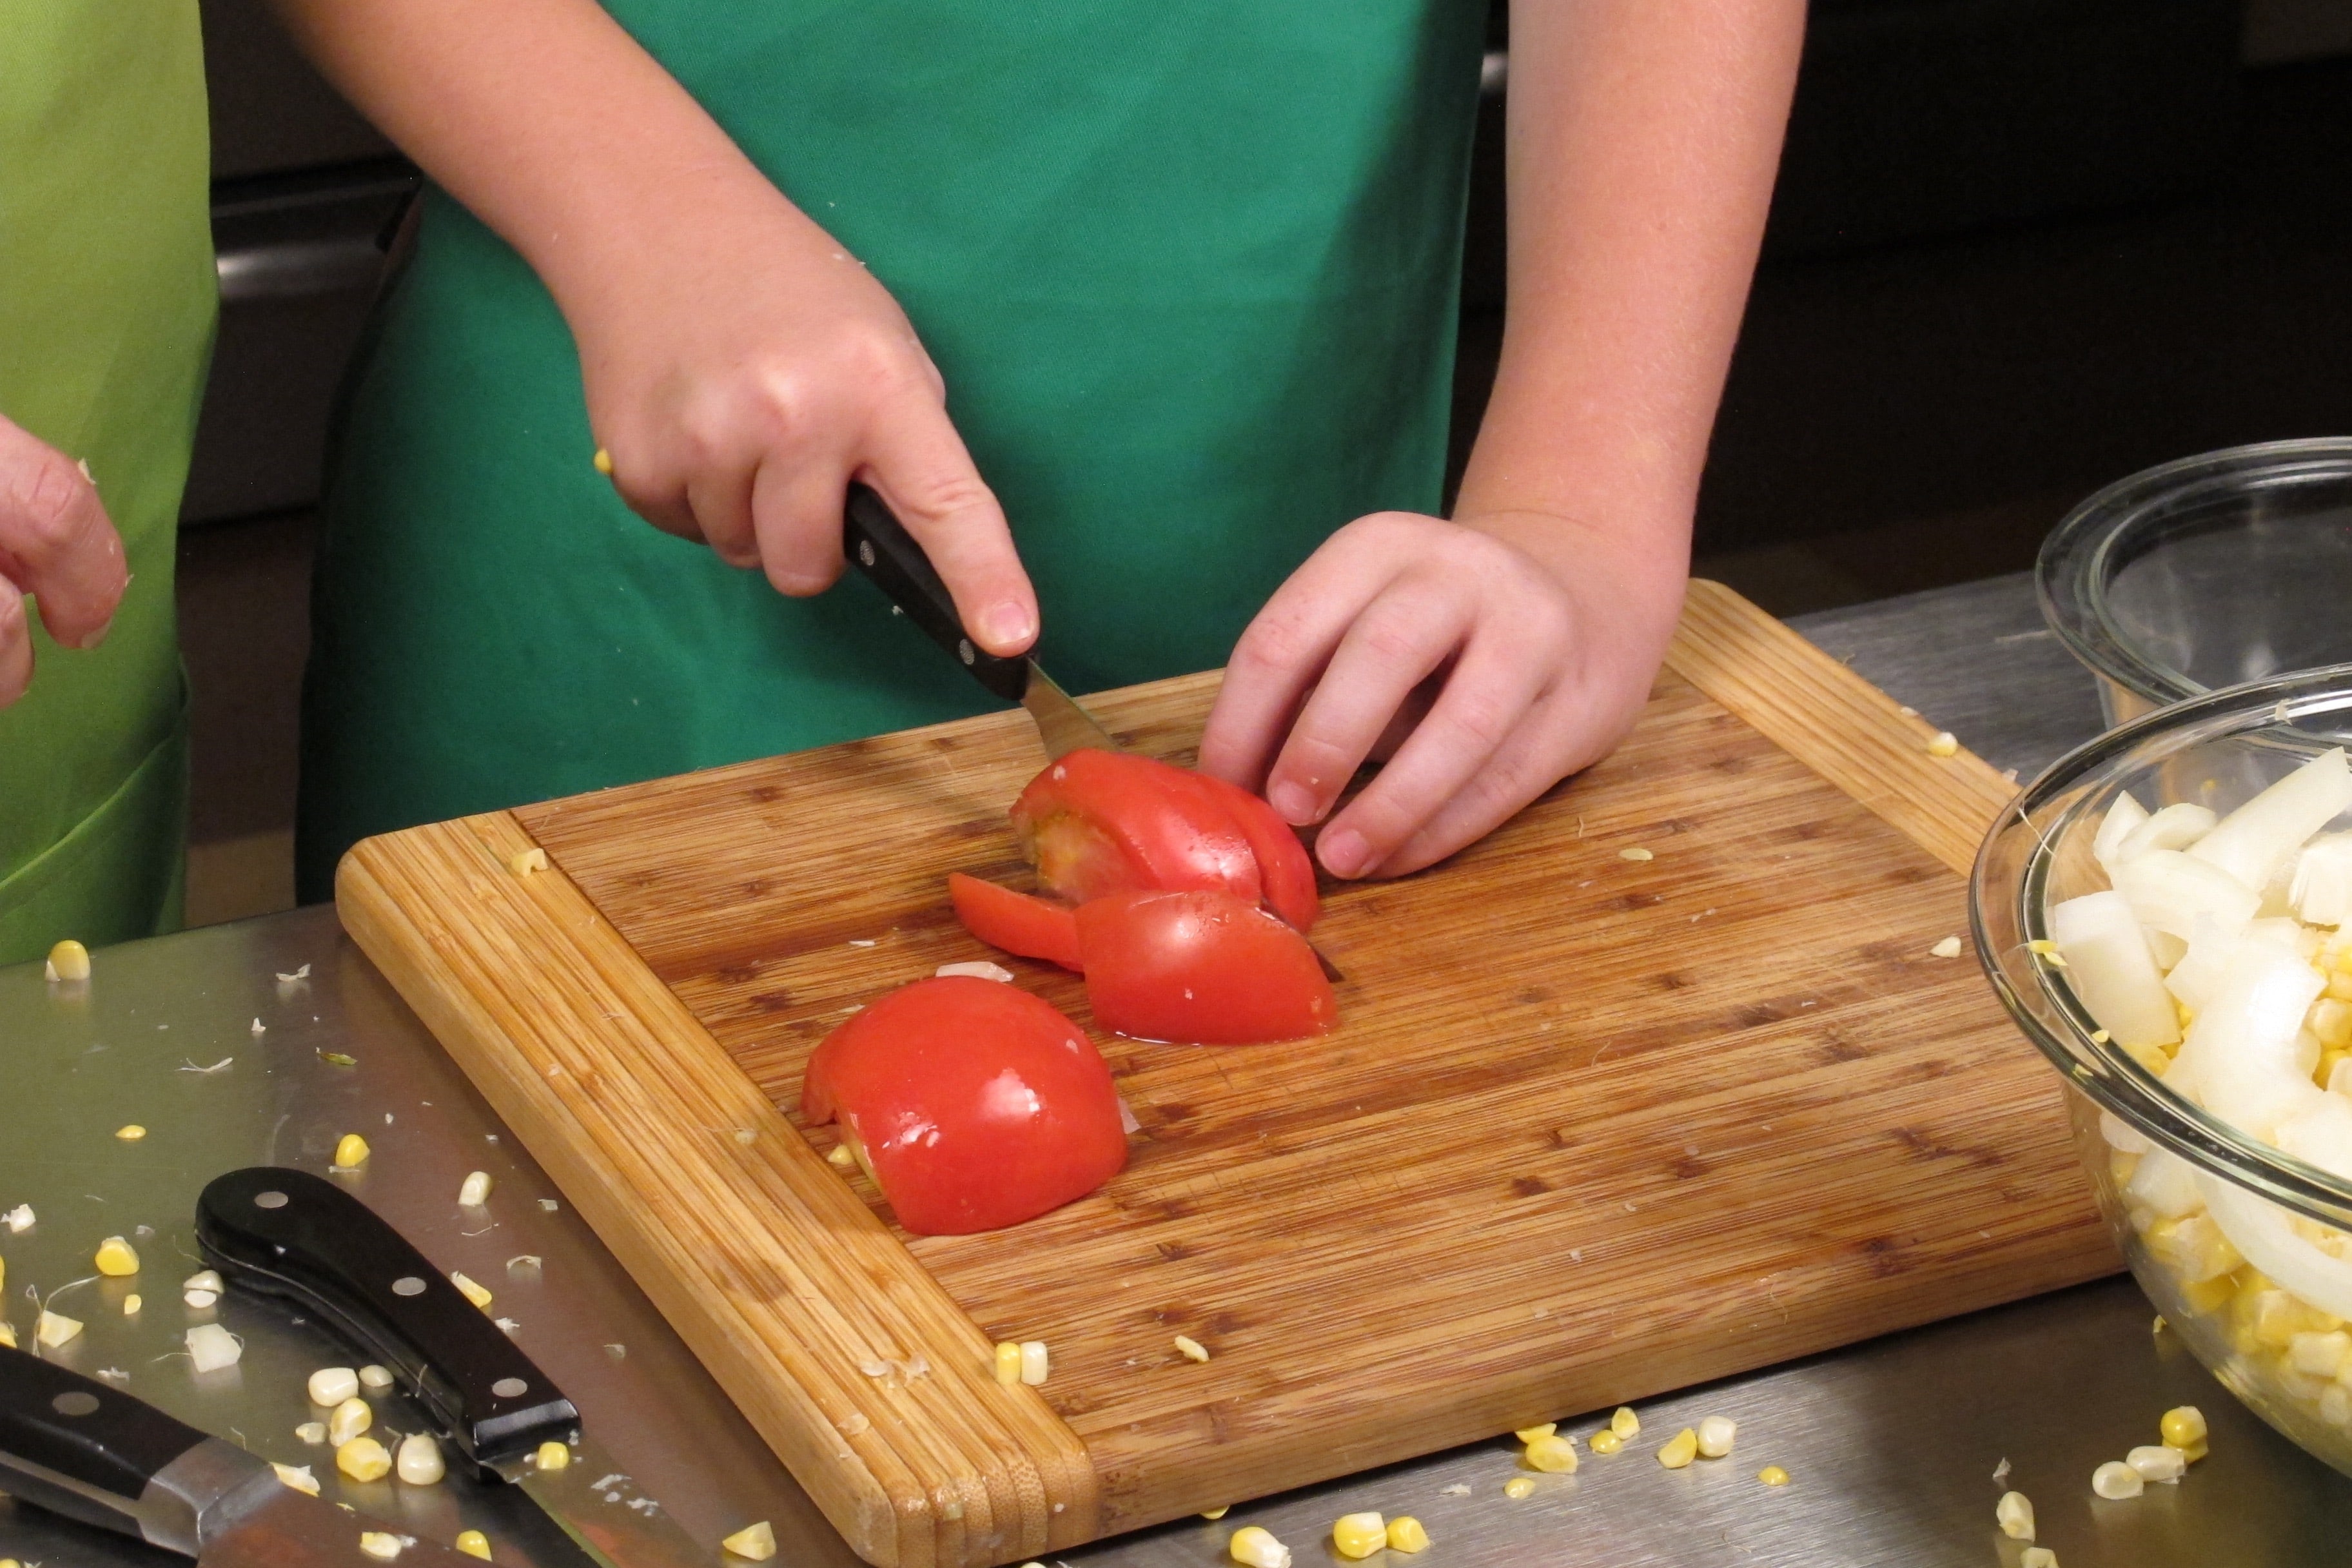 Slice tomatoes.